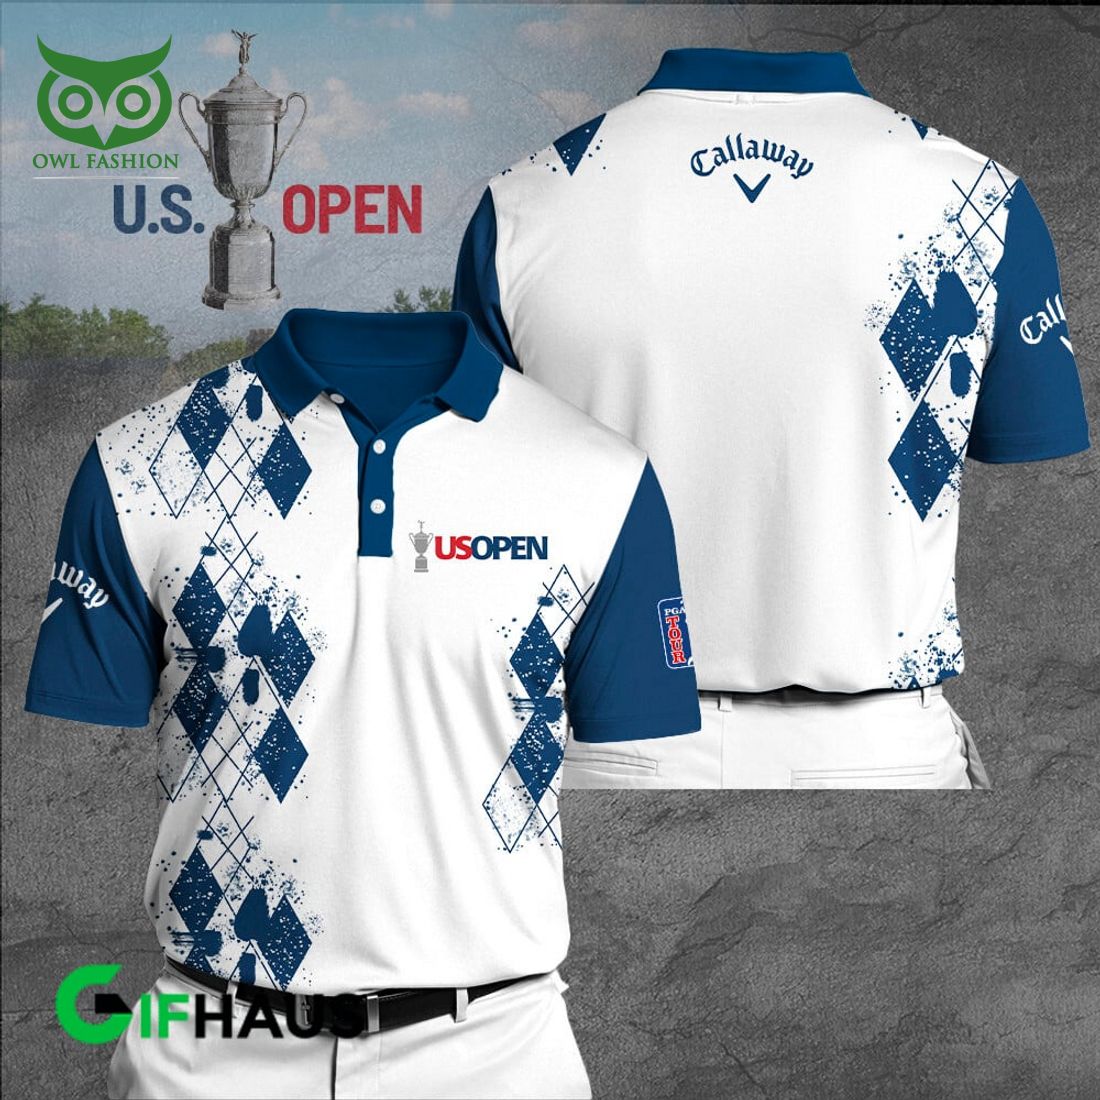 callaway x us open white 3d polo shirt 1 5scEc